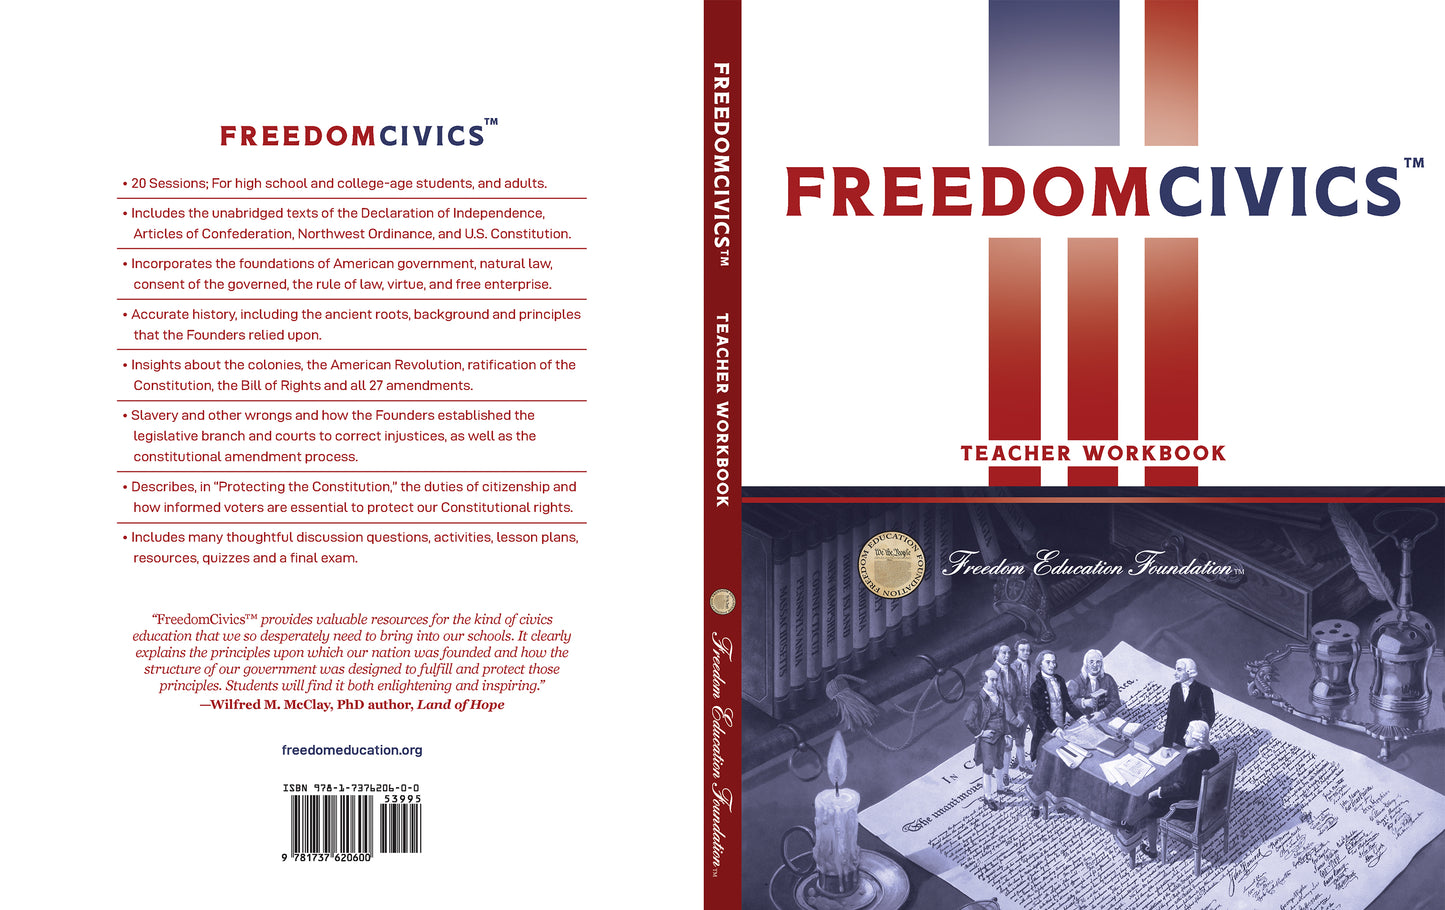 FreedomCivics® Teacher book - Foundations of American Government